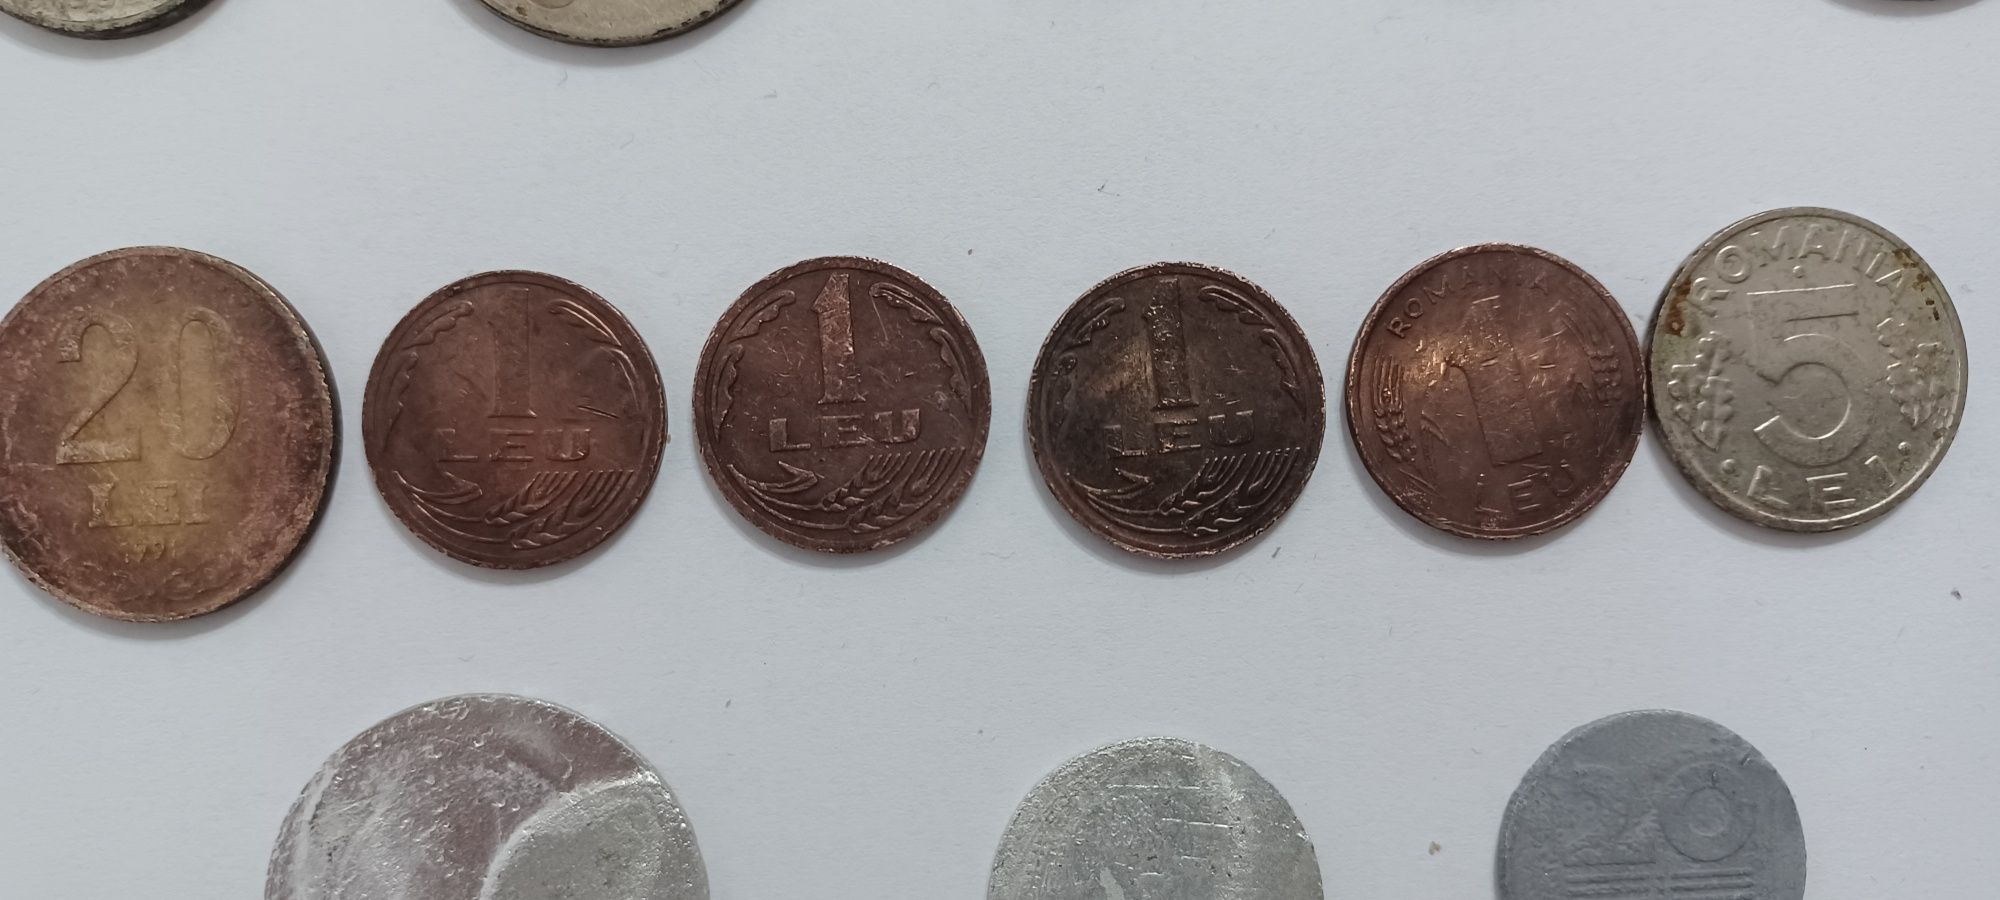 Bani vechi Romînesti